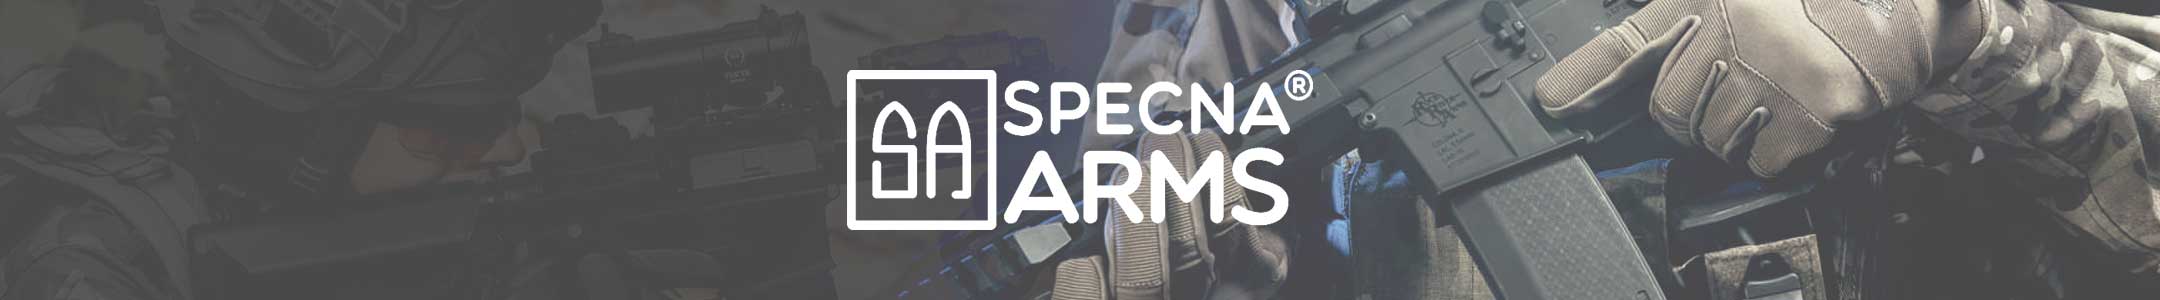 Specna Arms online shop